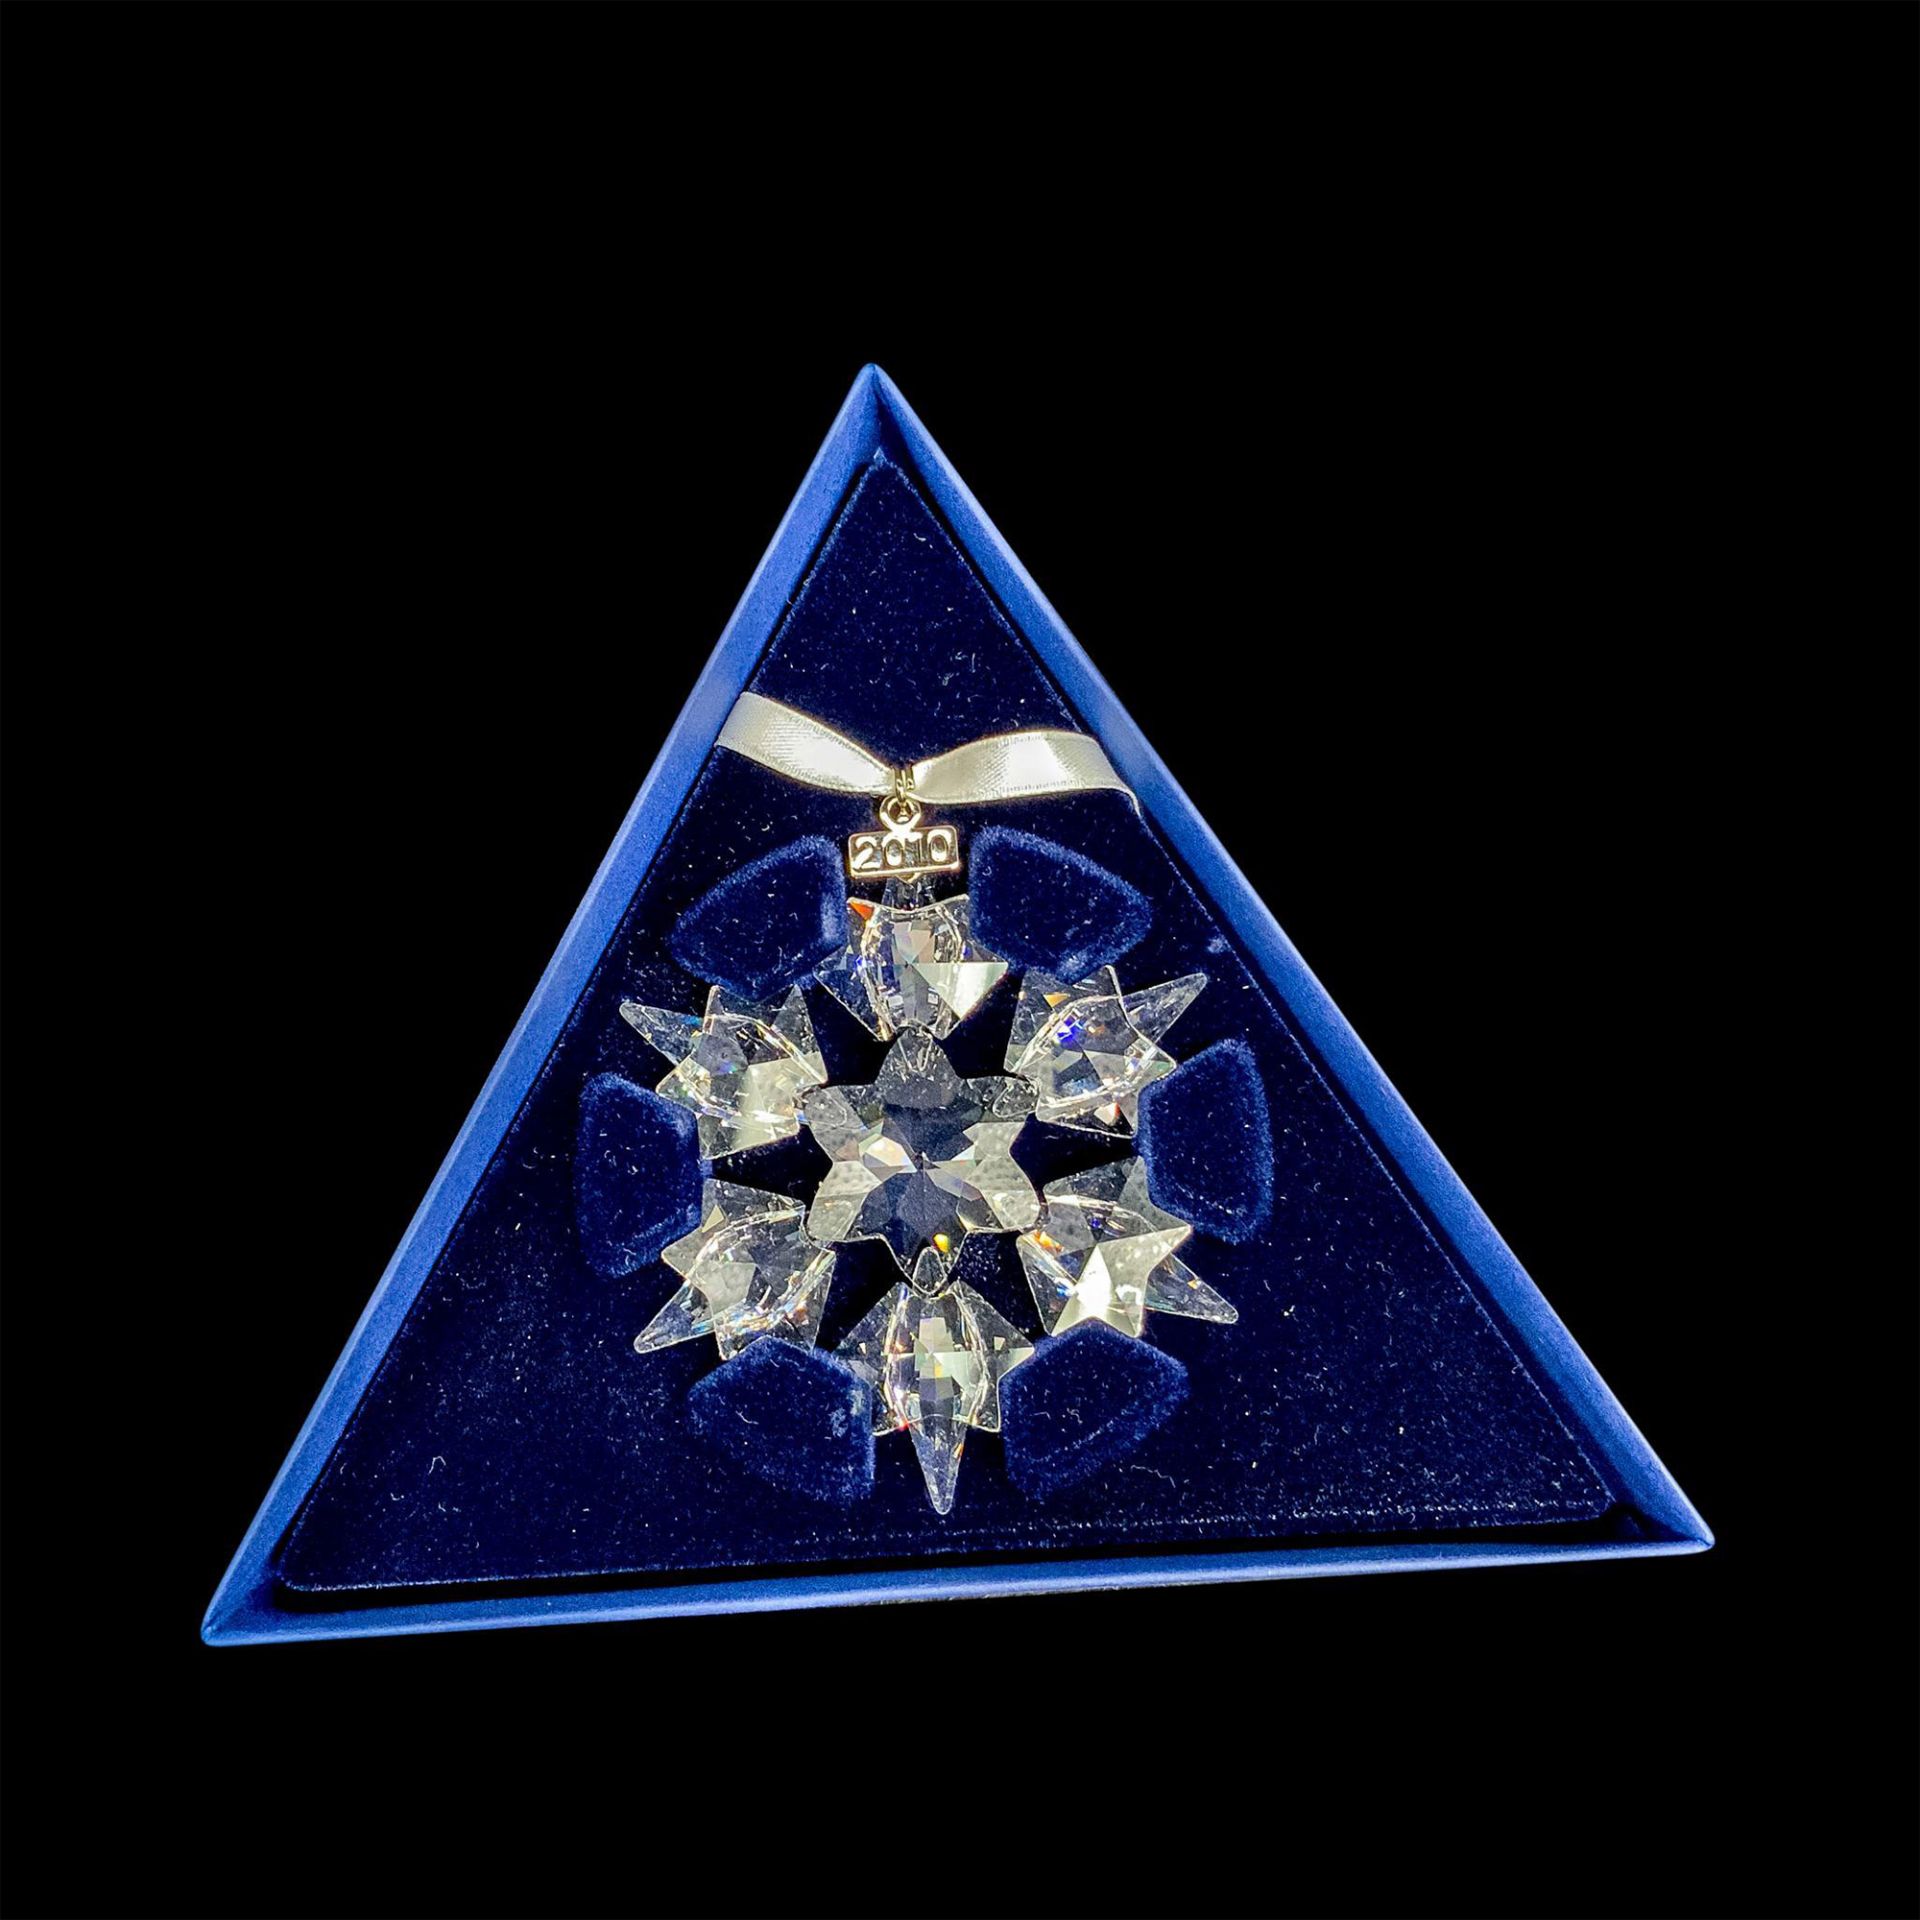 Swarovski Crystal 2010 Annual Snowflake Christmas Ornament